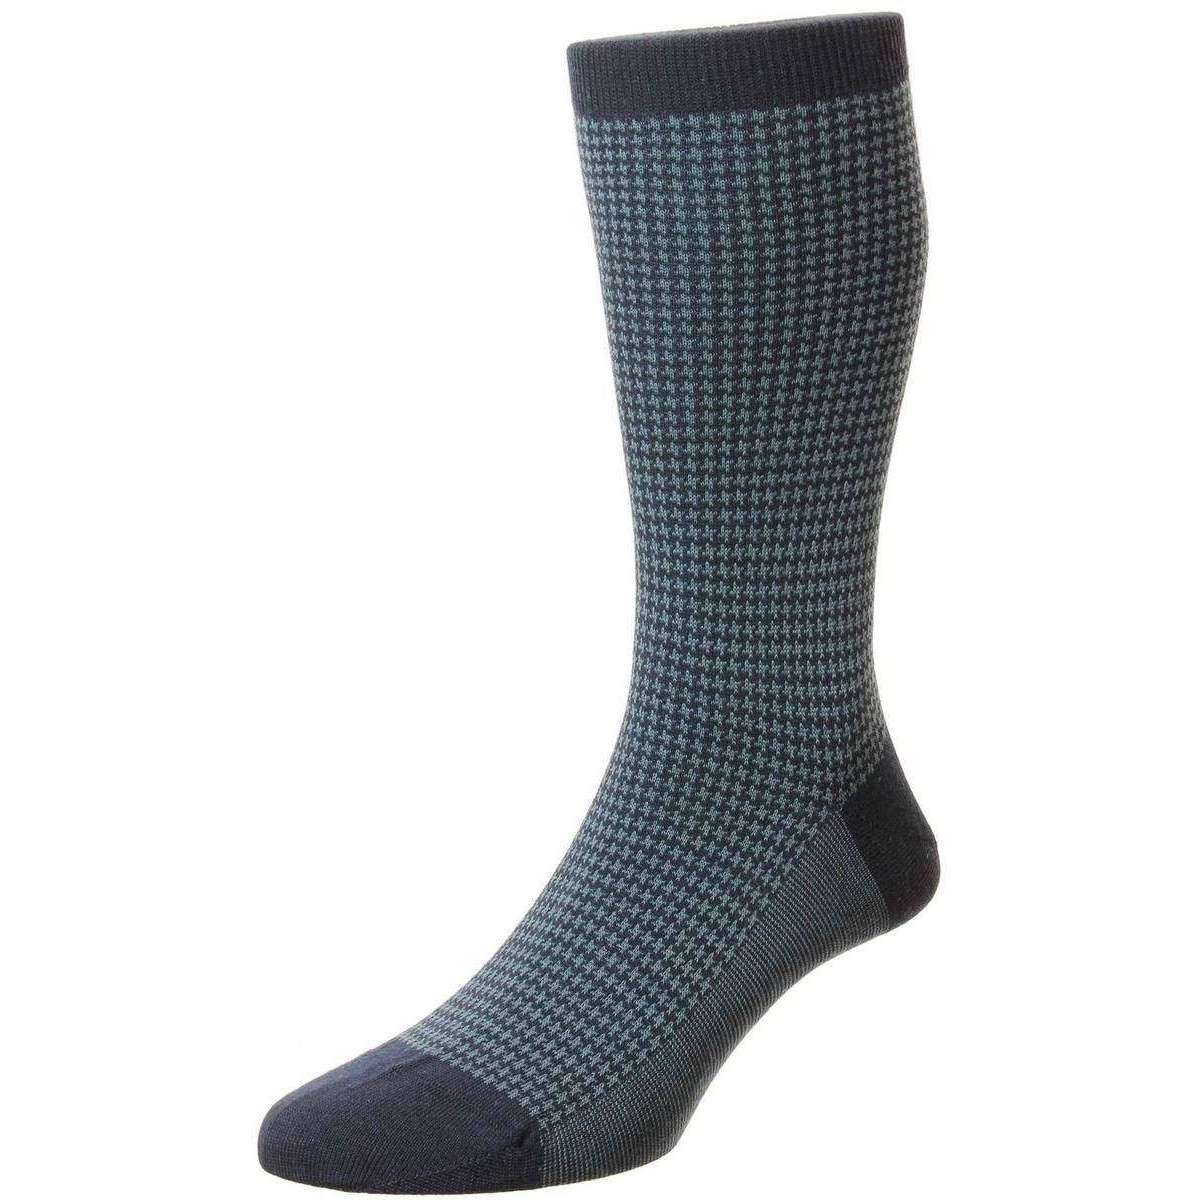 Pantherella Highbury Merino Wool Houndstooth Socks - Navy